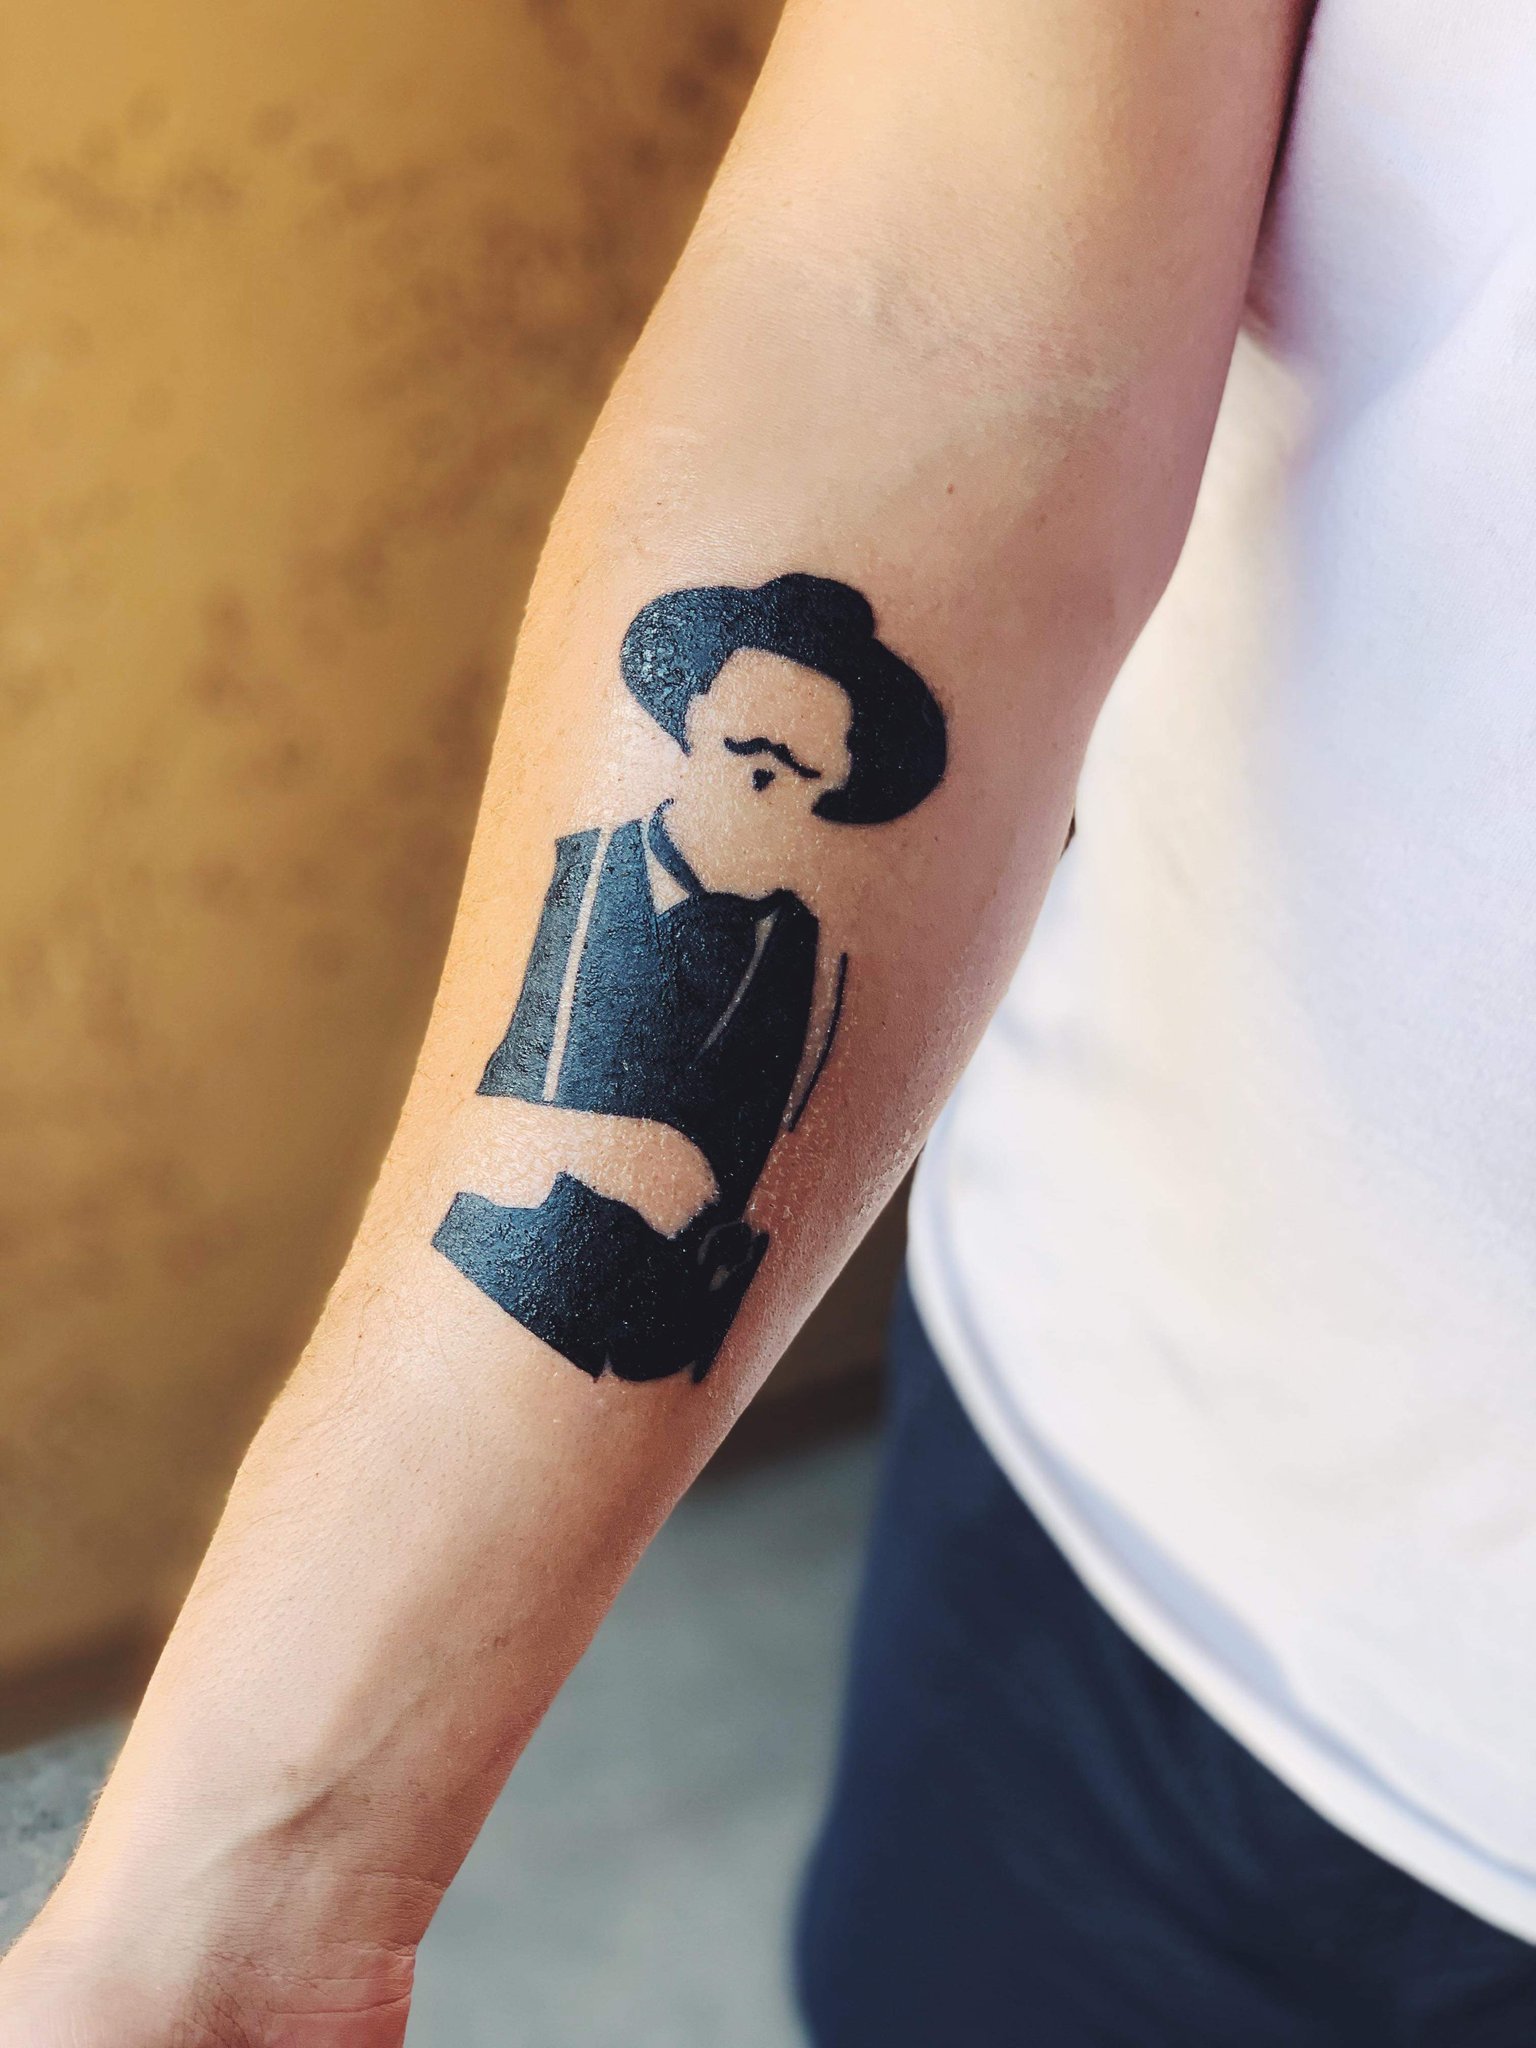 ryan on X: "I got to tattoo @valkilmer as doc again https://t.co/FmAURkdvR0" / X